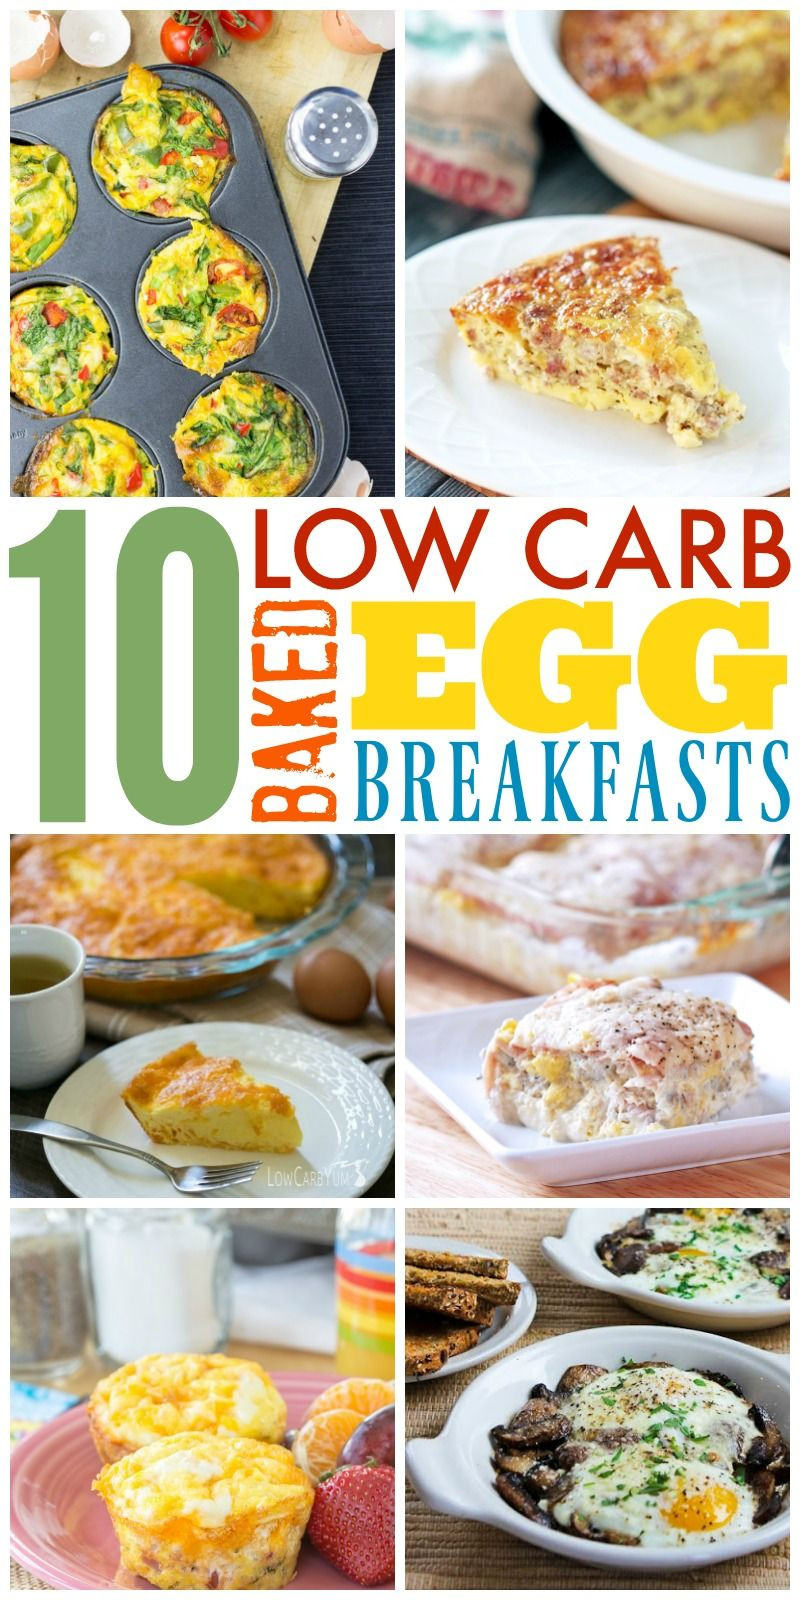 Low Carb Diet Food List Breakfast Ideas
 Baked Eggs – 10 Low Carb Breakfast Ideas